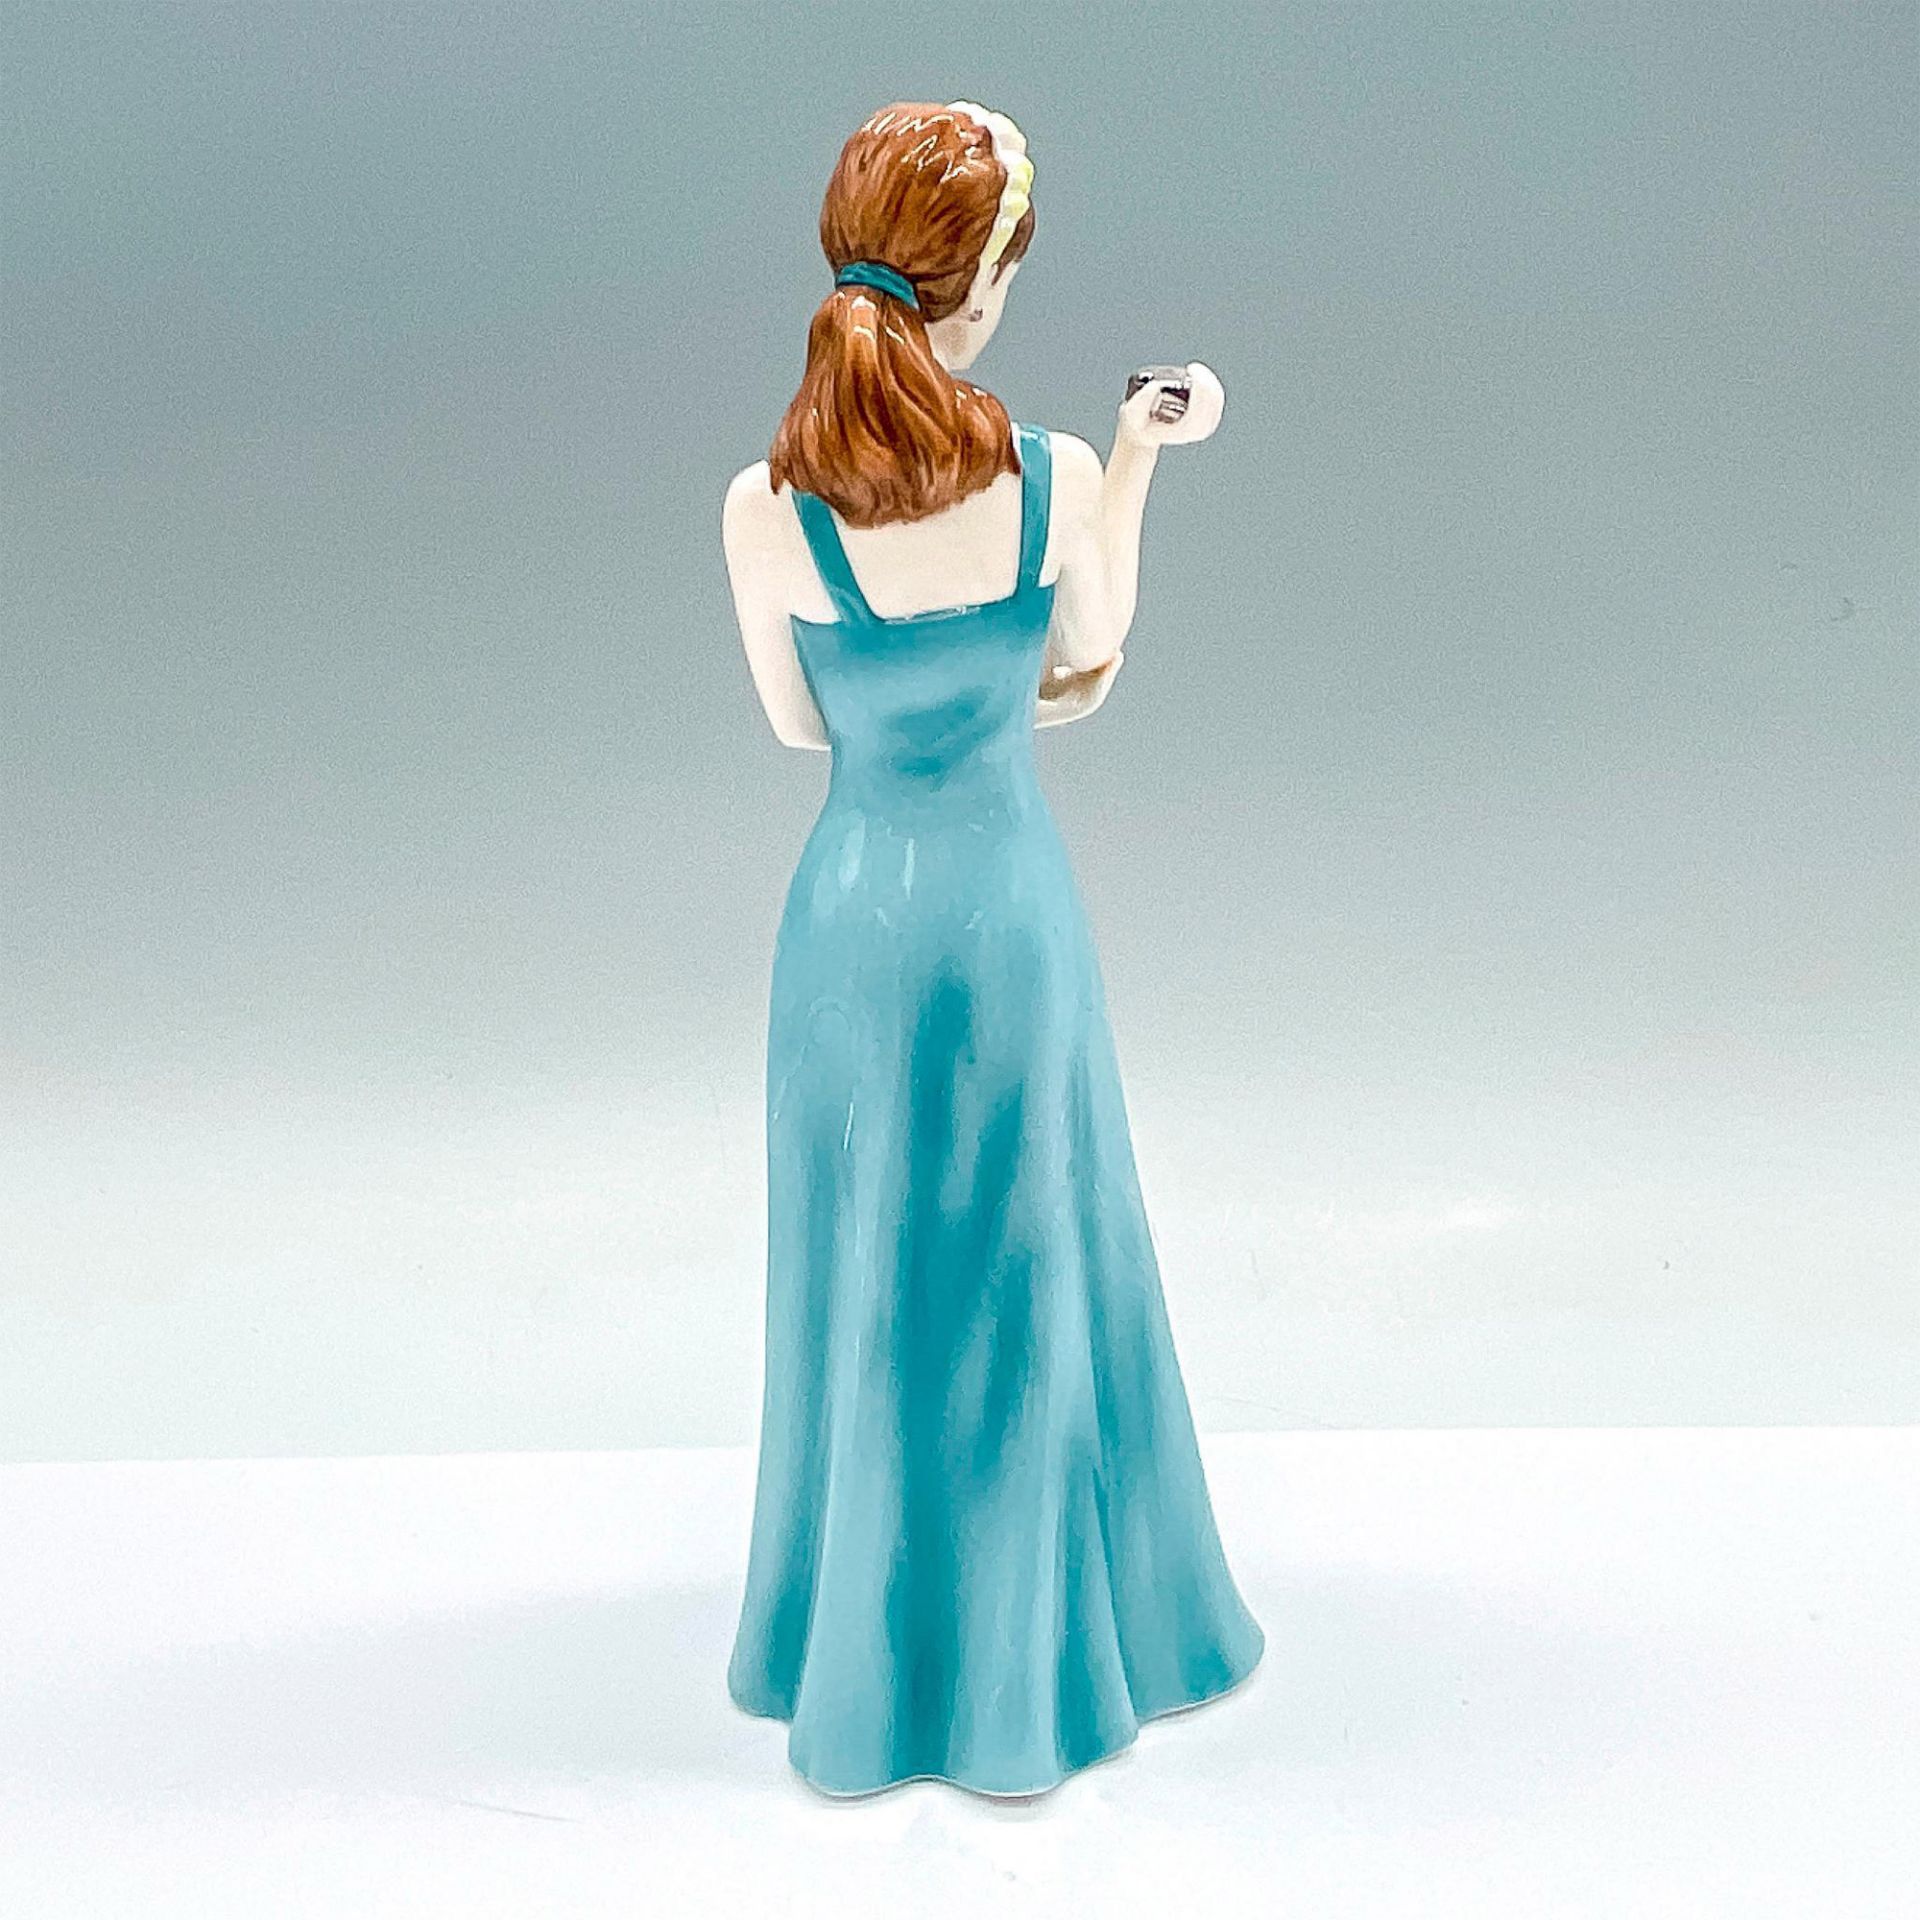 10th Anniversary (Tin) - HN5151 - Royal Doulton Figurine - Image 2 of 3